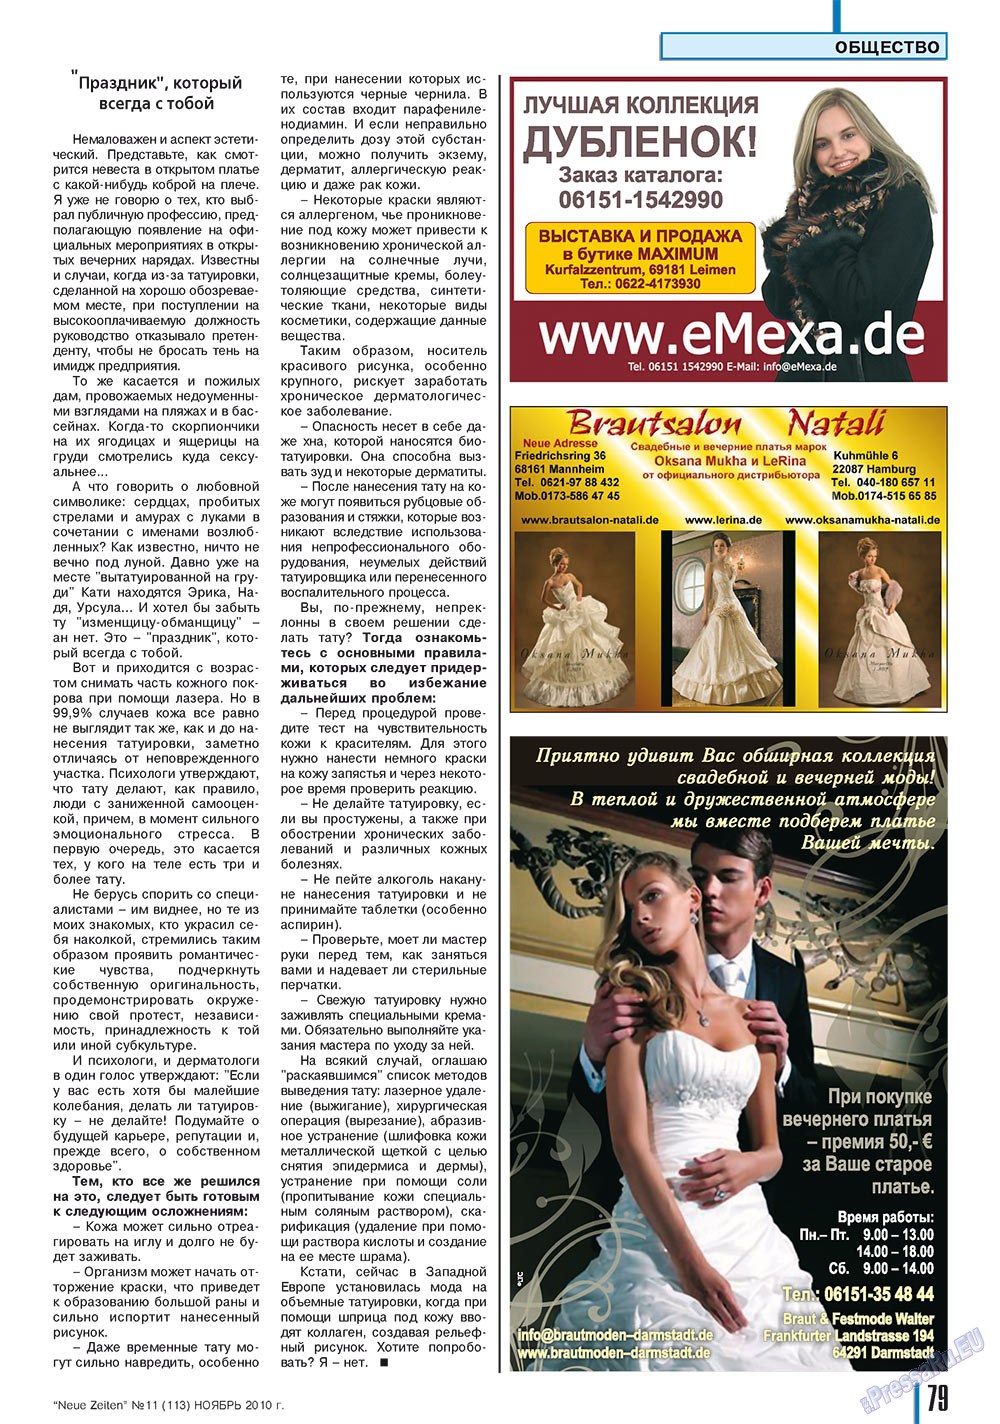 Neue Zeiten (журнал). 2010 год, номер 11, стр. 79